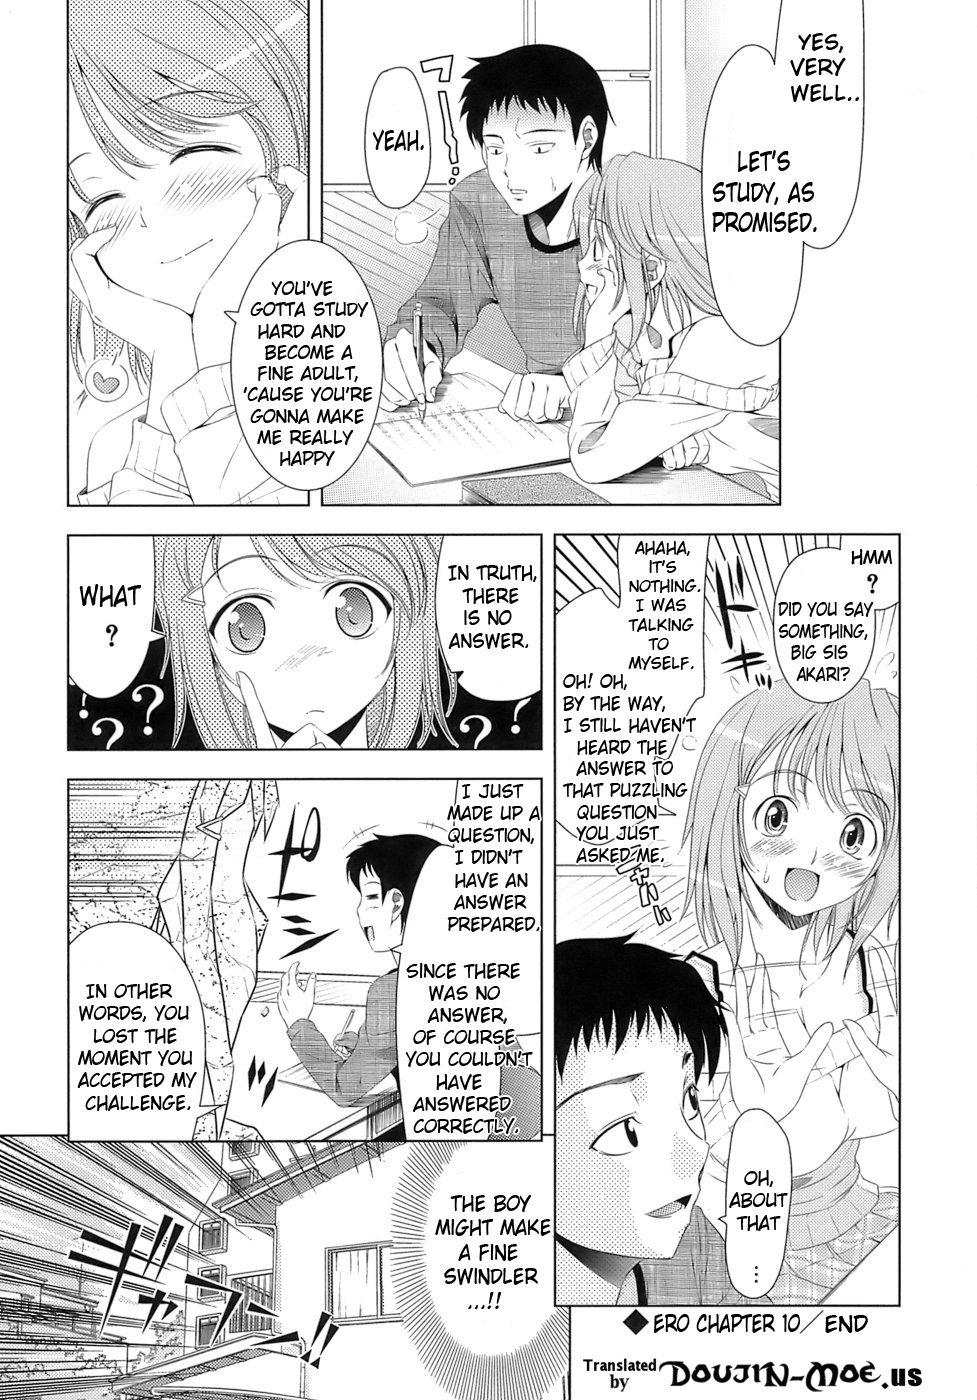 Let's Do Love Like the Ero-Manga Ch. 10 15